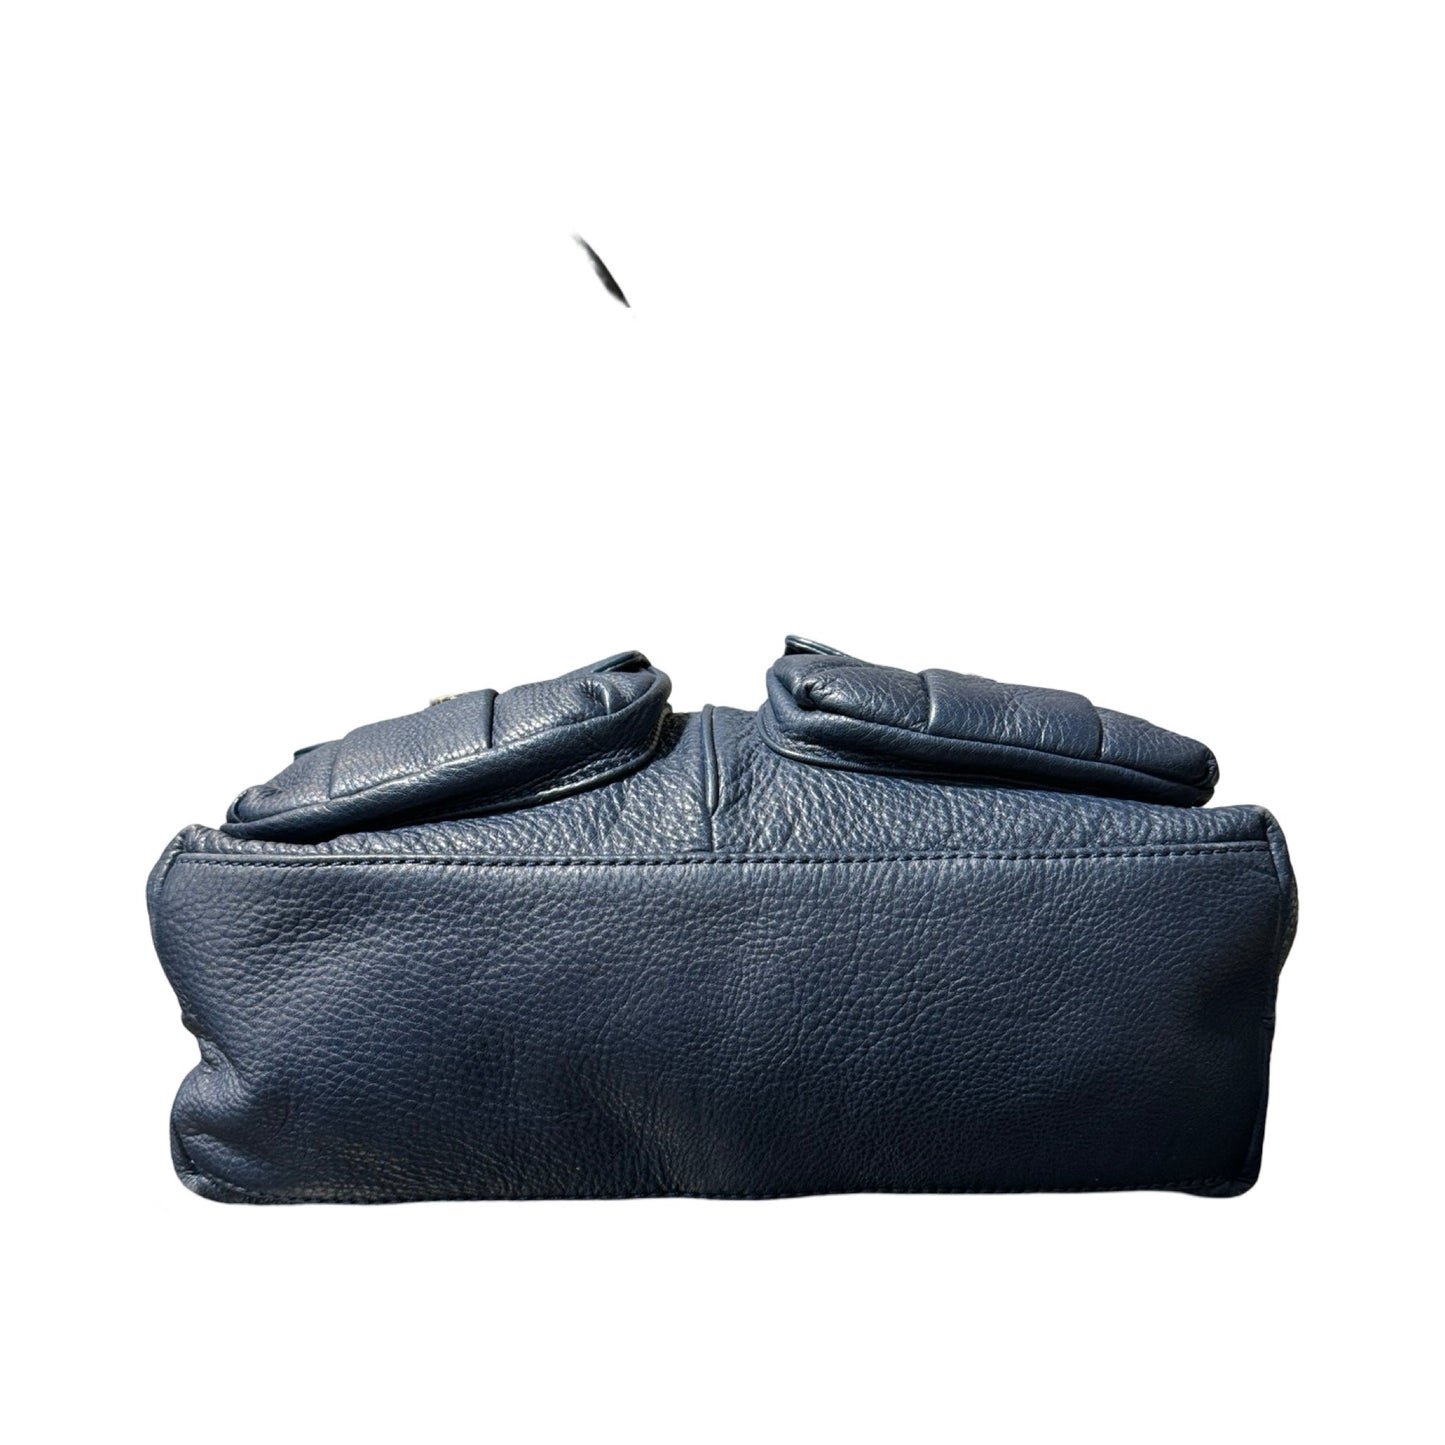 Handbag Michael Kors, Size Large